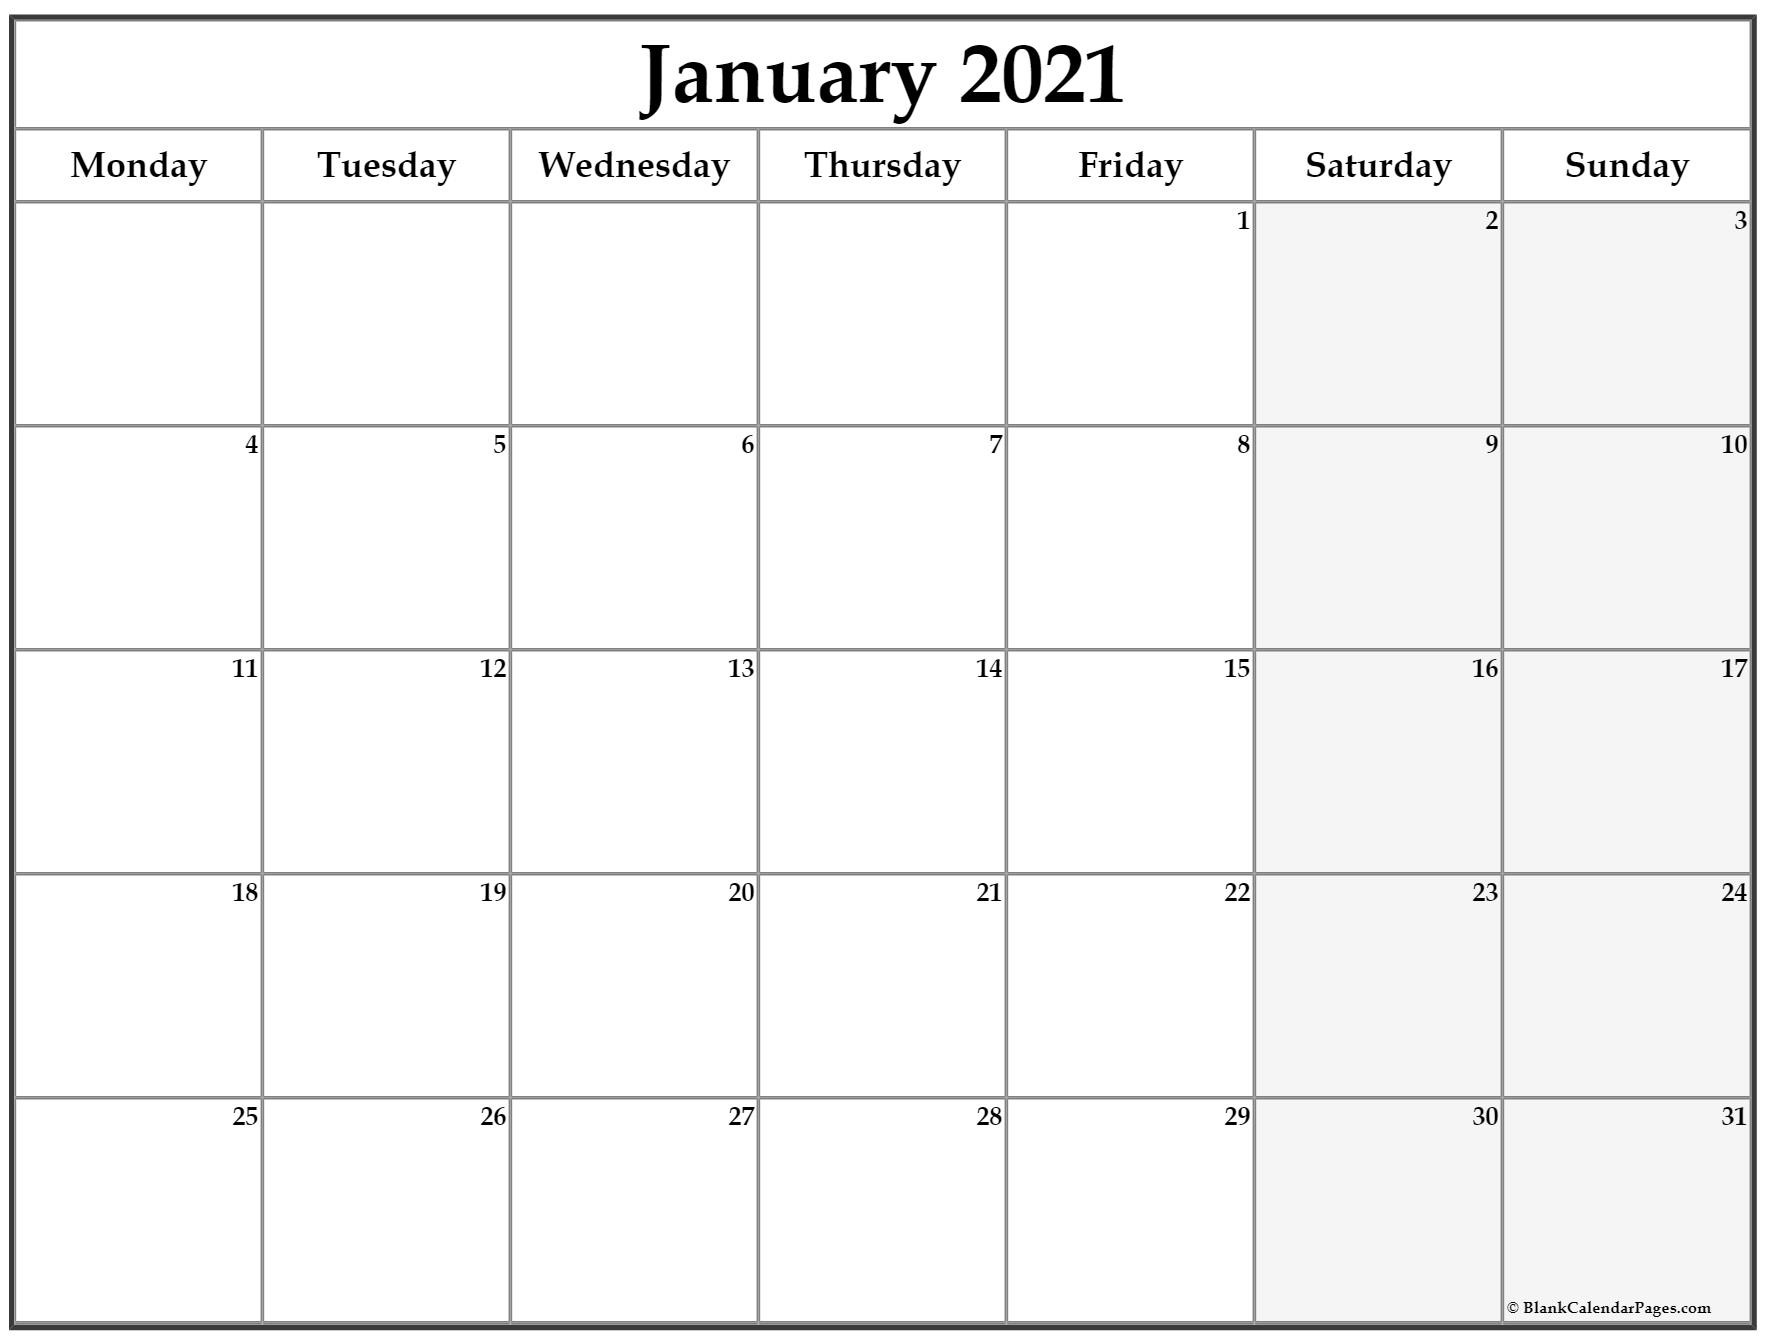 January 2021 Monday Calendar | Monday To Sunday-2021 Calendar That Shows Only Monday Through Friday